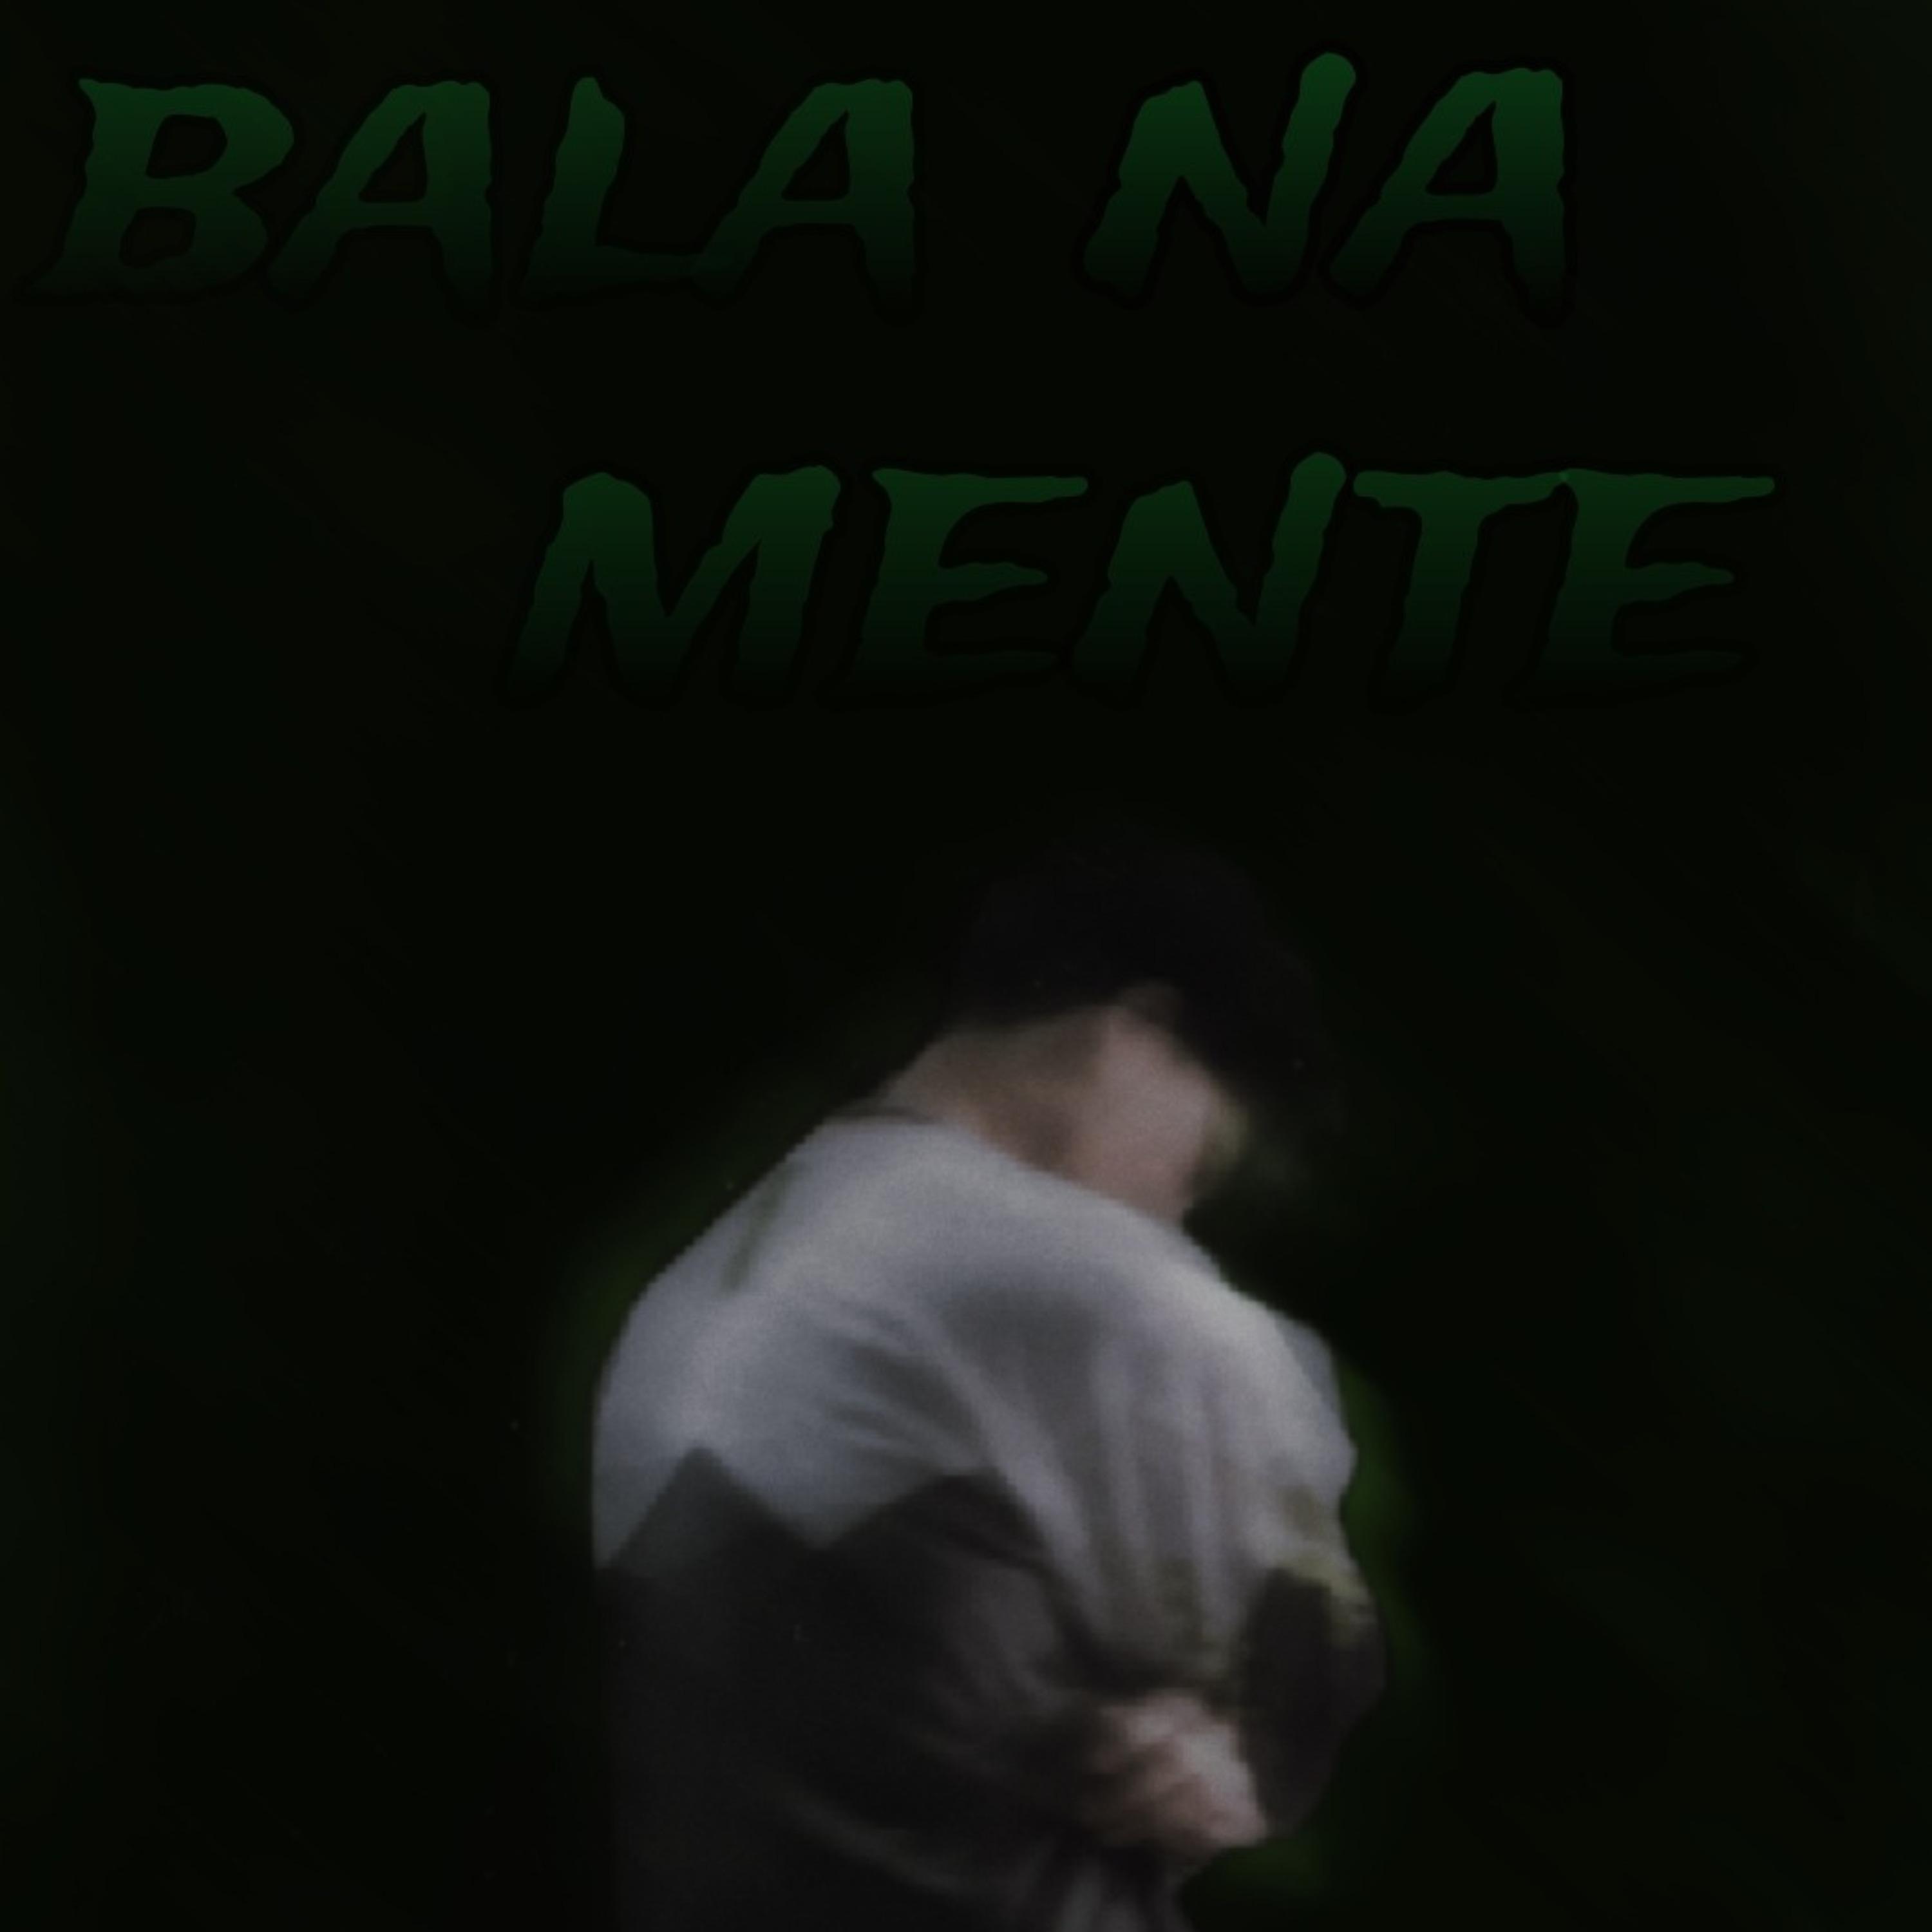 Постер альбома Bala na Mente